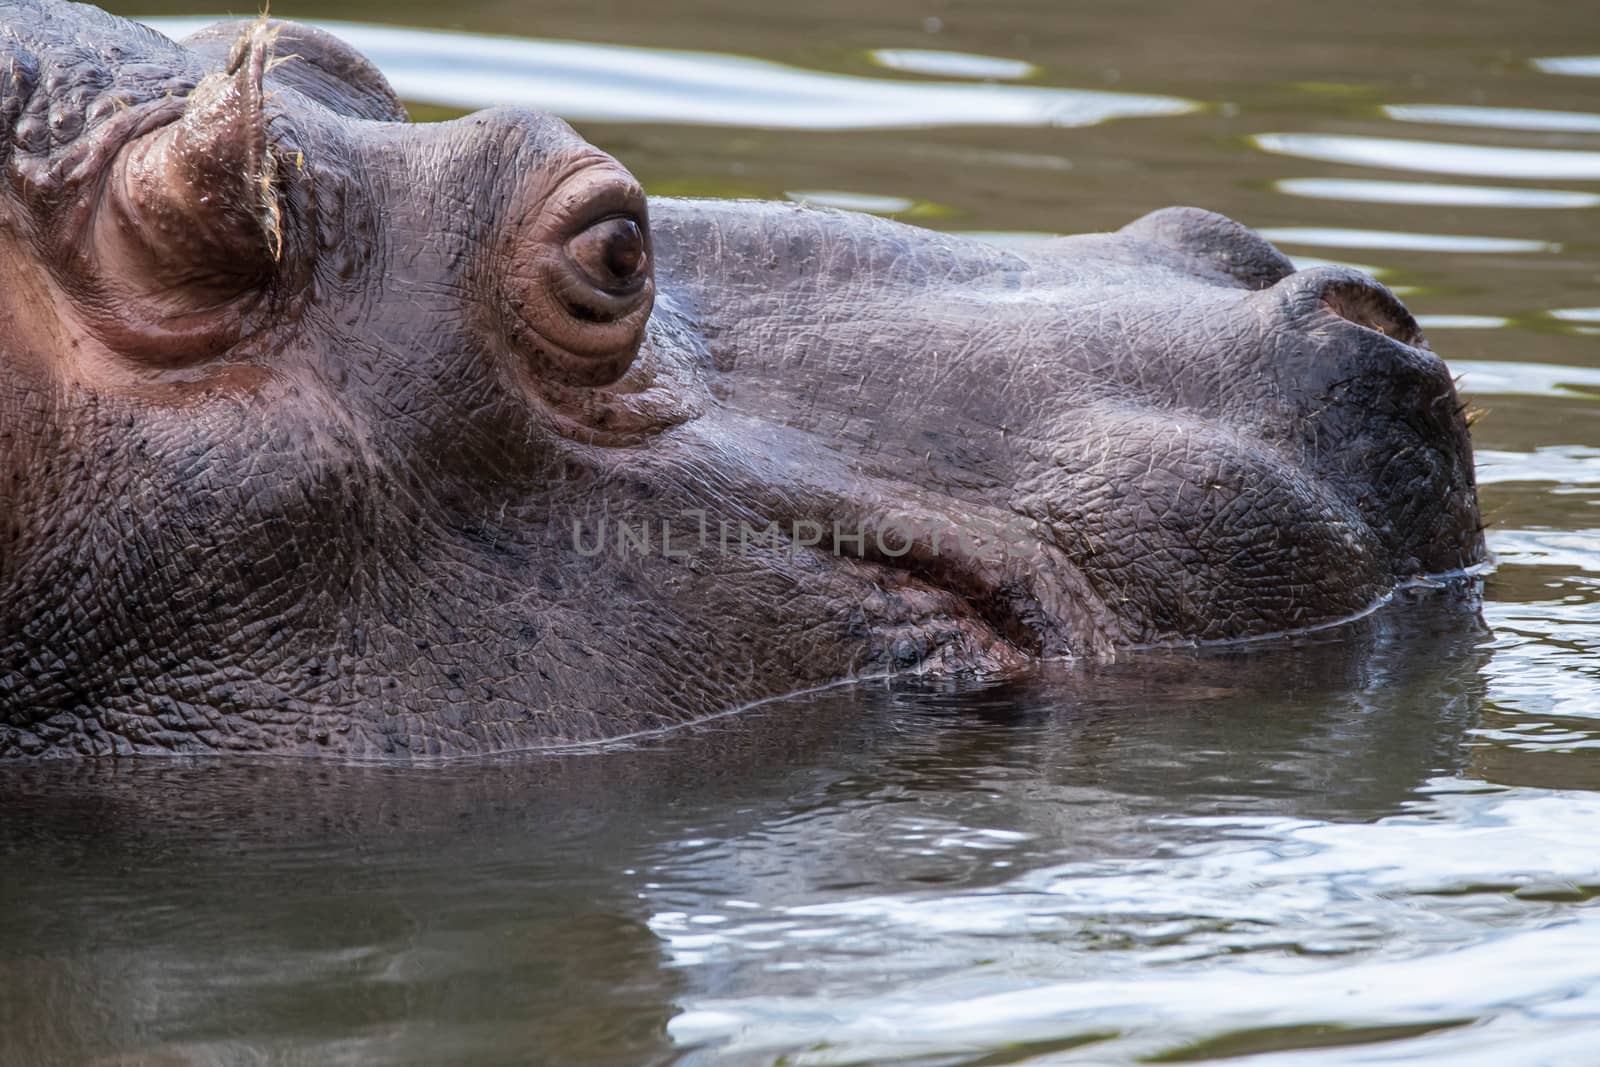 Hippo in artificial habitat at zoo in Seattle, WA